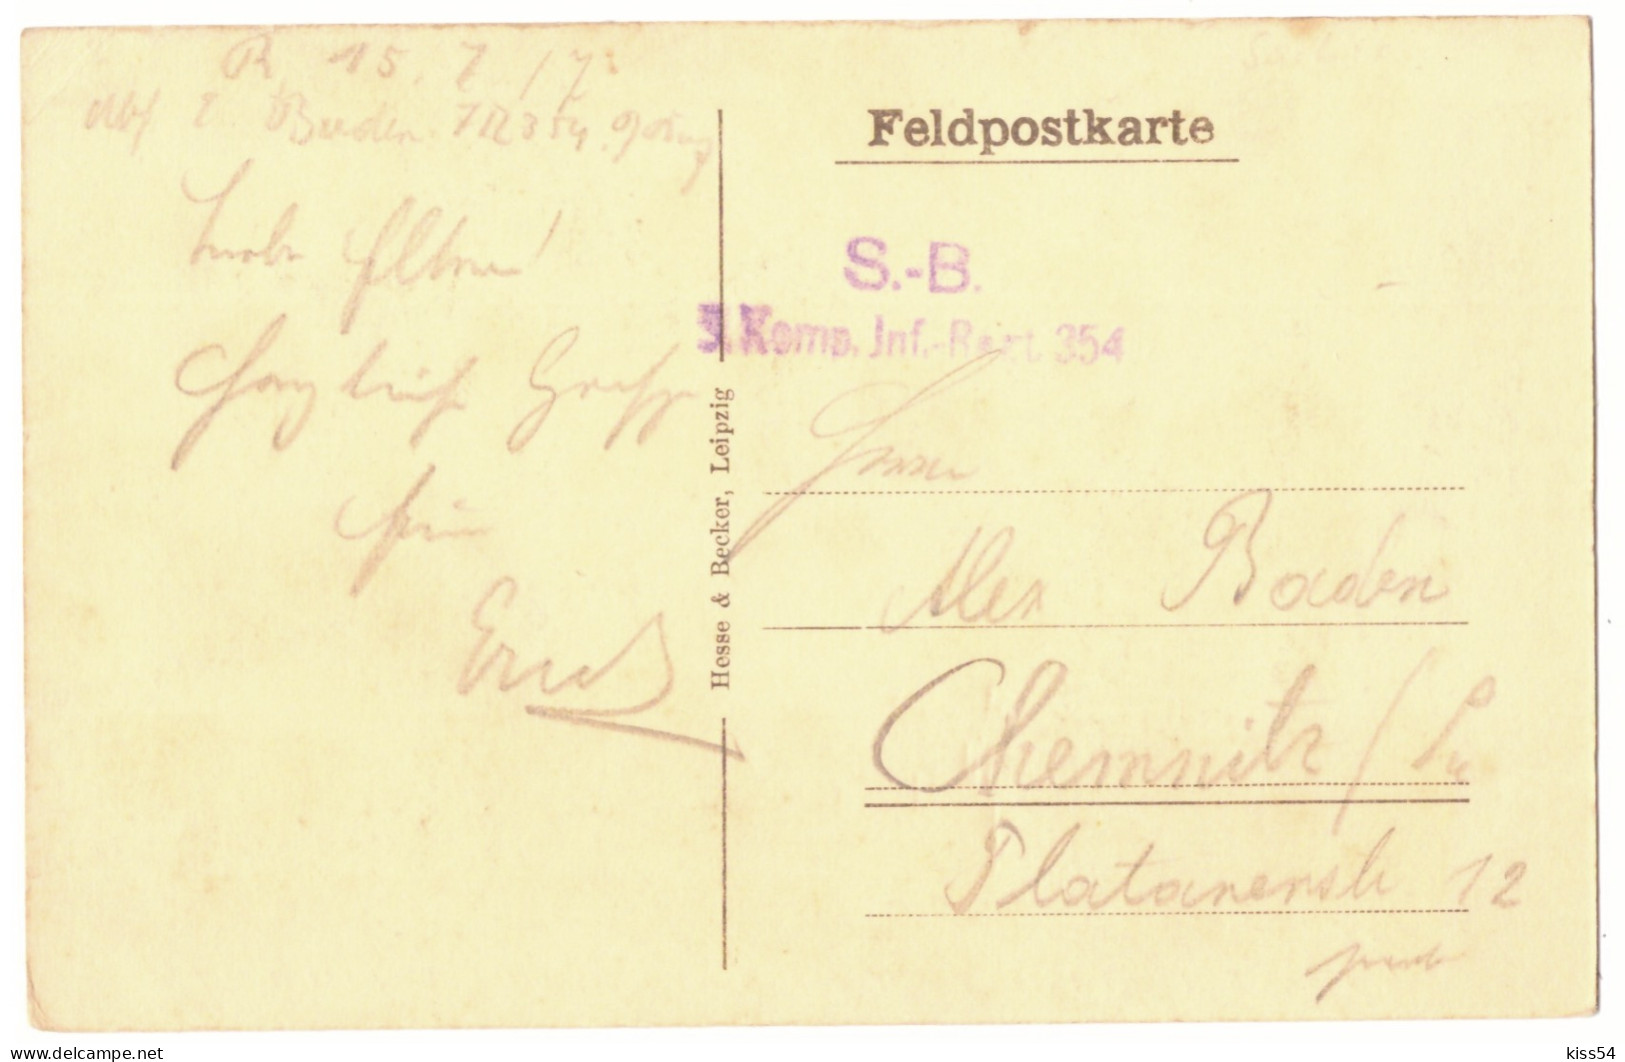 RO 81 - 18381 FOCSANI, German Army On The Street, Romania - Old Postcard, CENSOR - Used - 1917 - Rumania